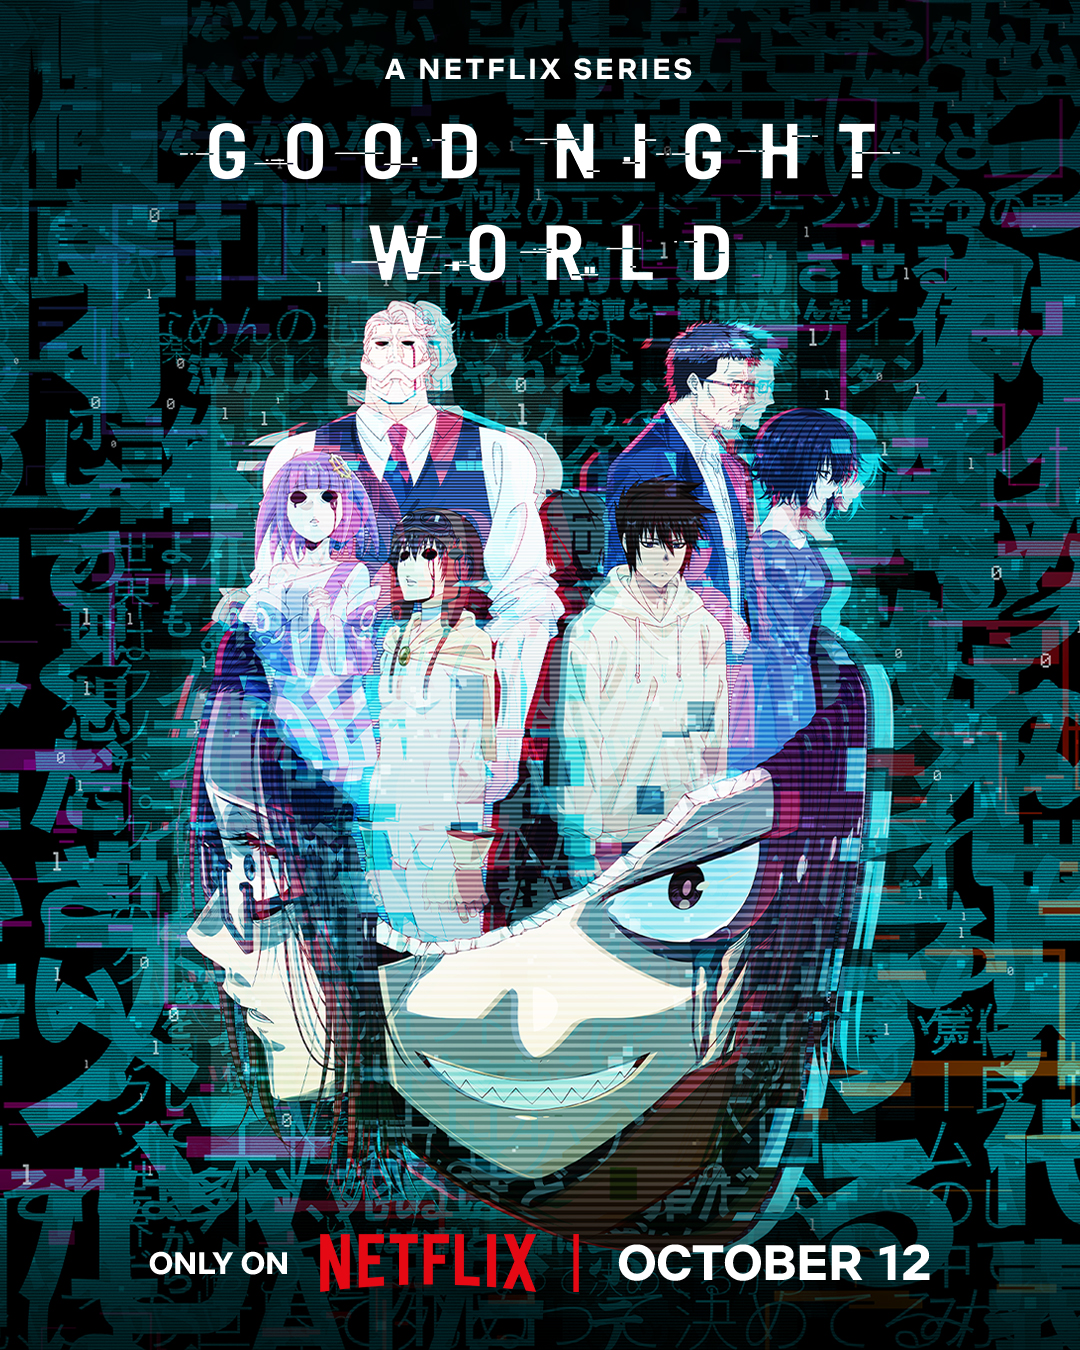 Netflix Announces an October Premiere for Good Night World 